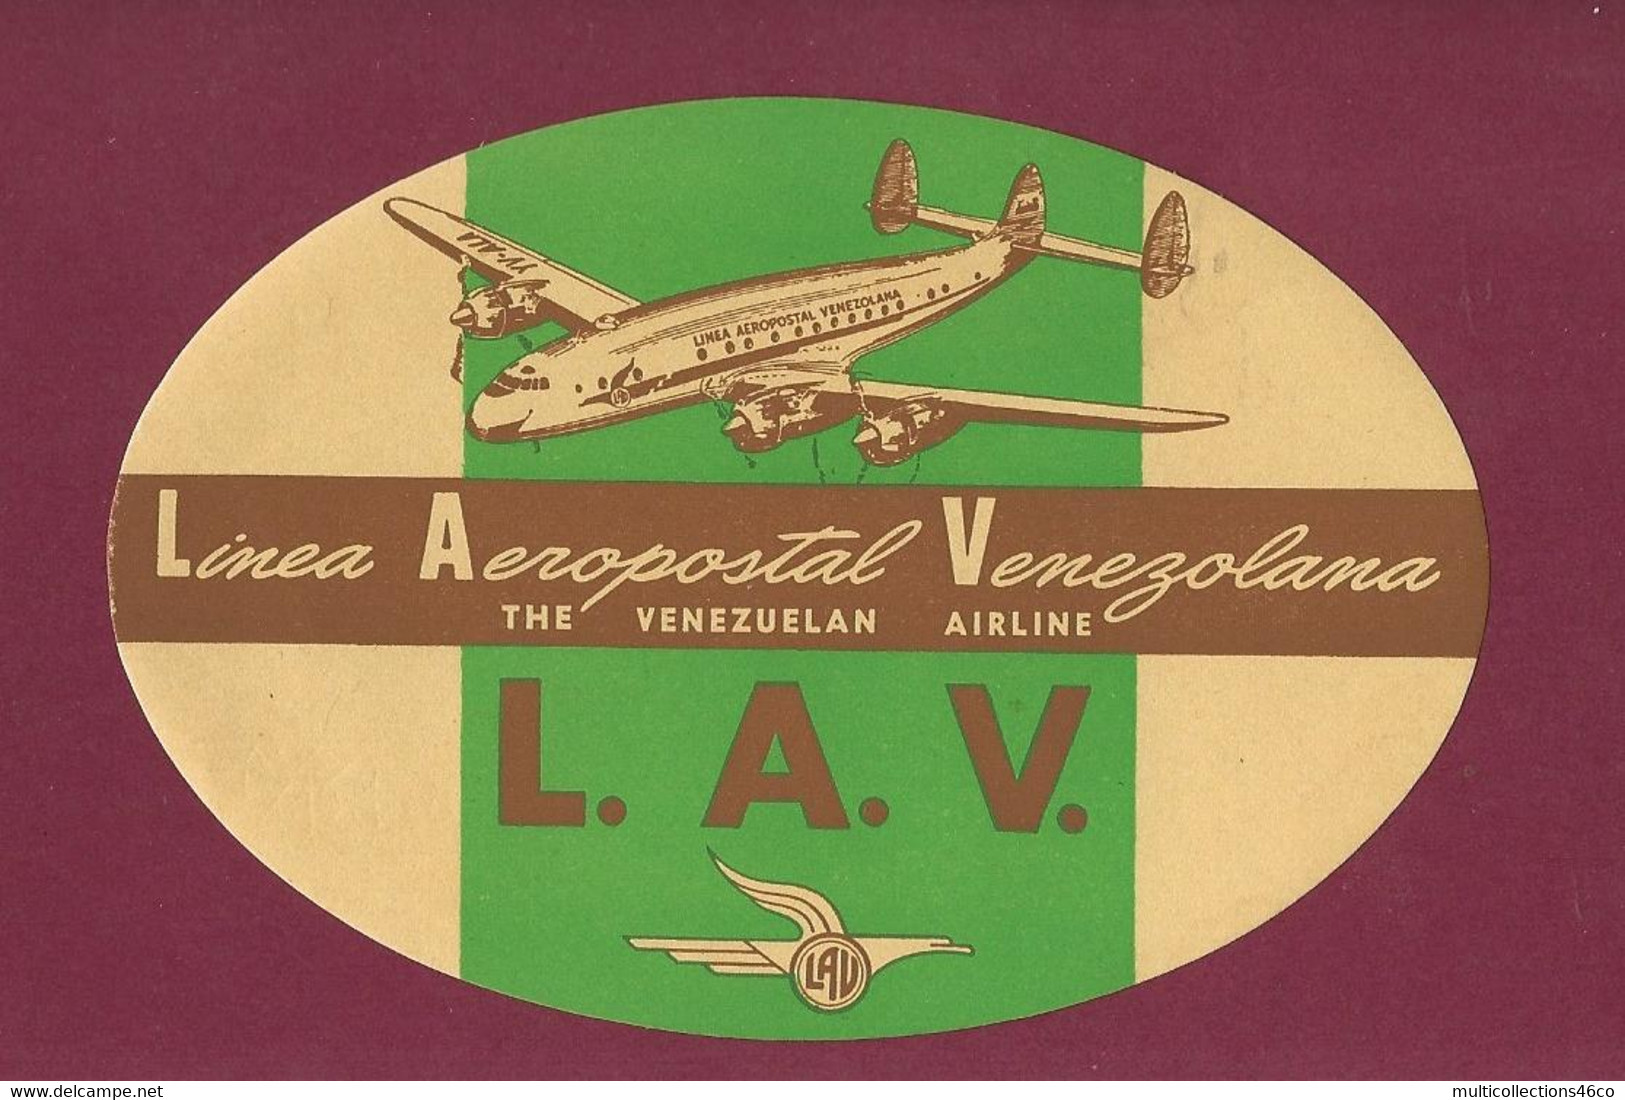 060922 - AVIATION ETIQUETTE A BAGAGE LAV Linea Aeropostal Venezolana THE VENEZUELAN AIRLINE Avion - Baggage Labels & Tags